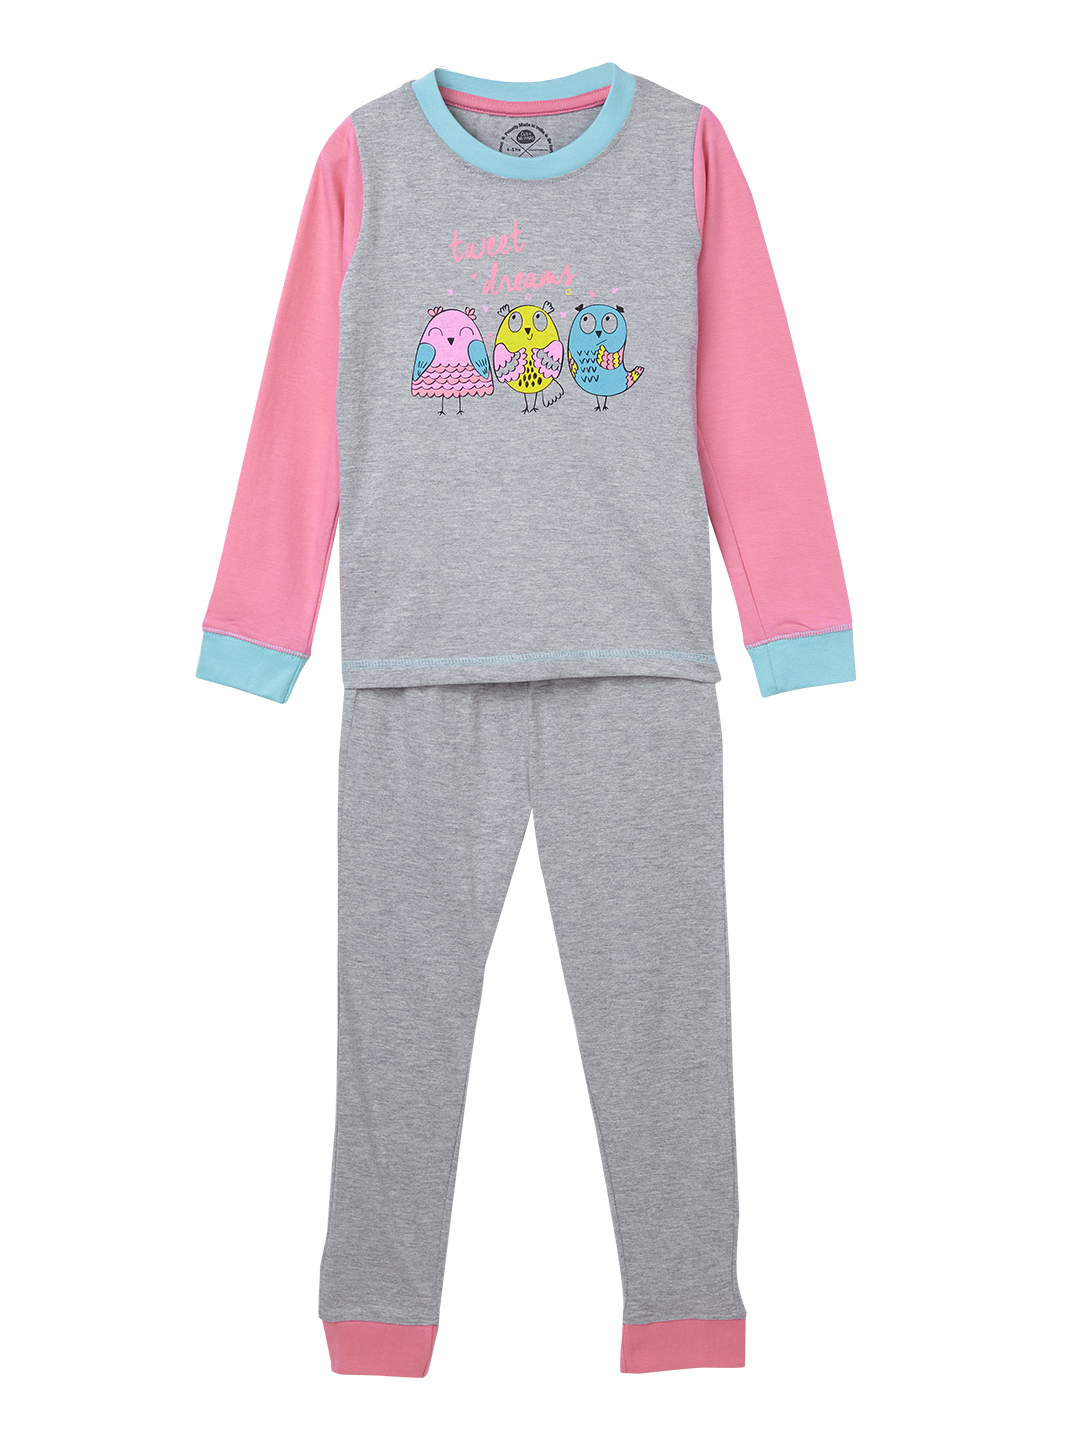 Girls Sleepwear Set - full sleeve tee with tweet dreams and pyjama (EOSS)